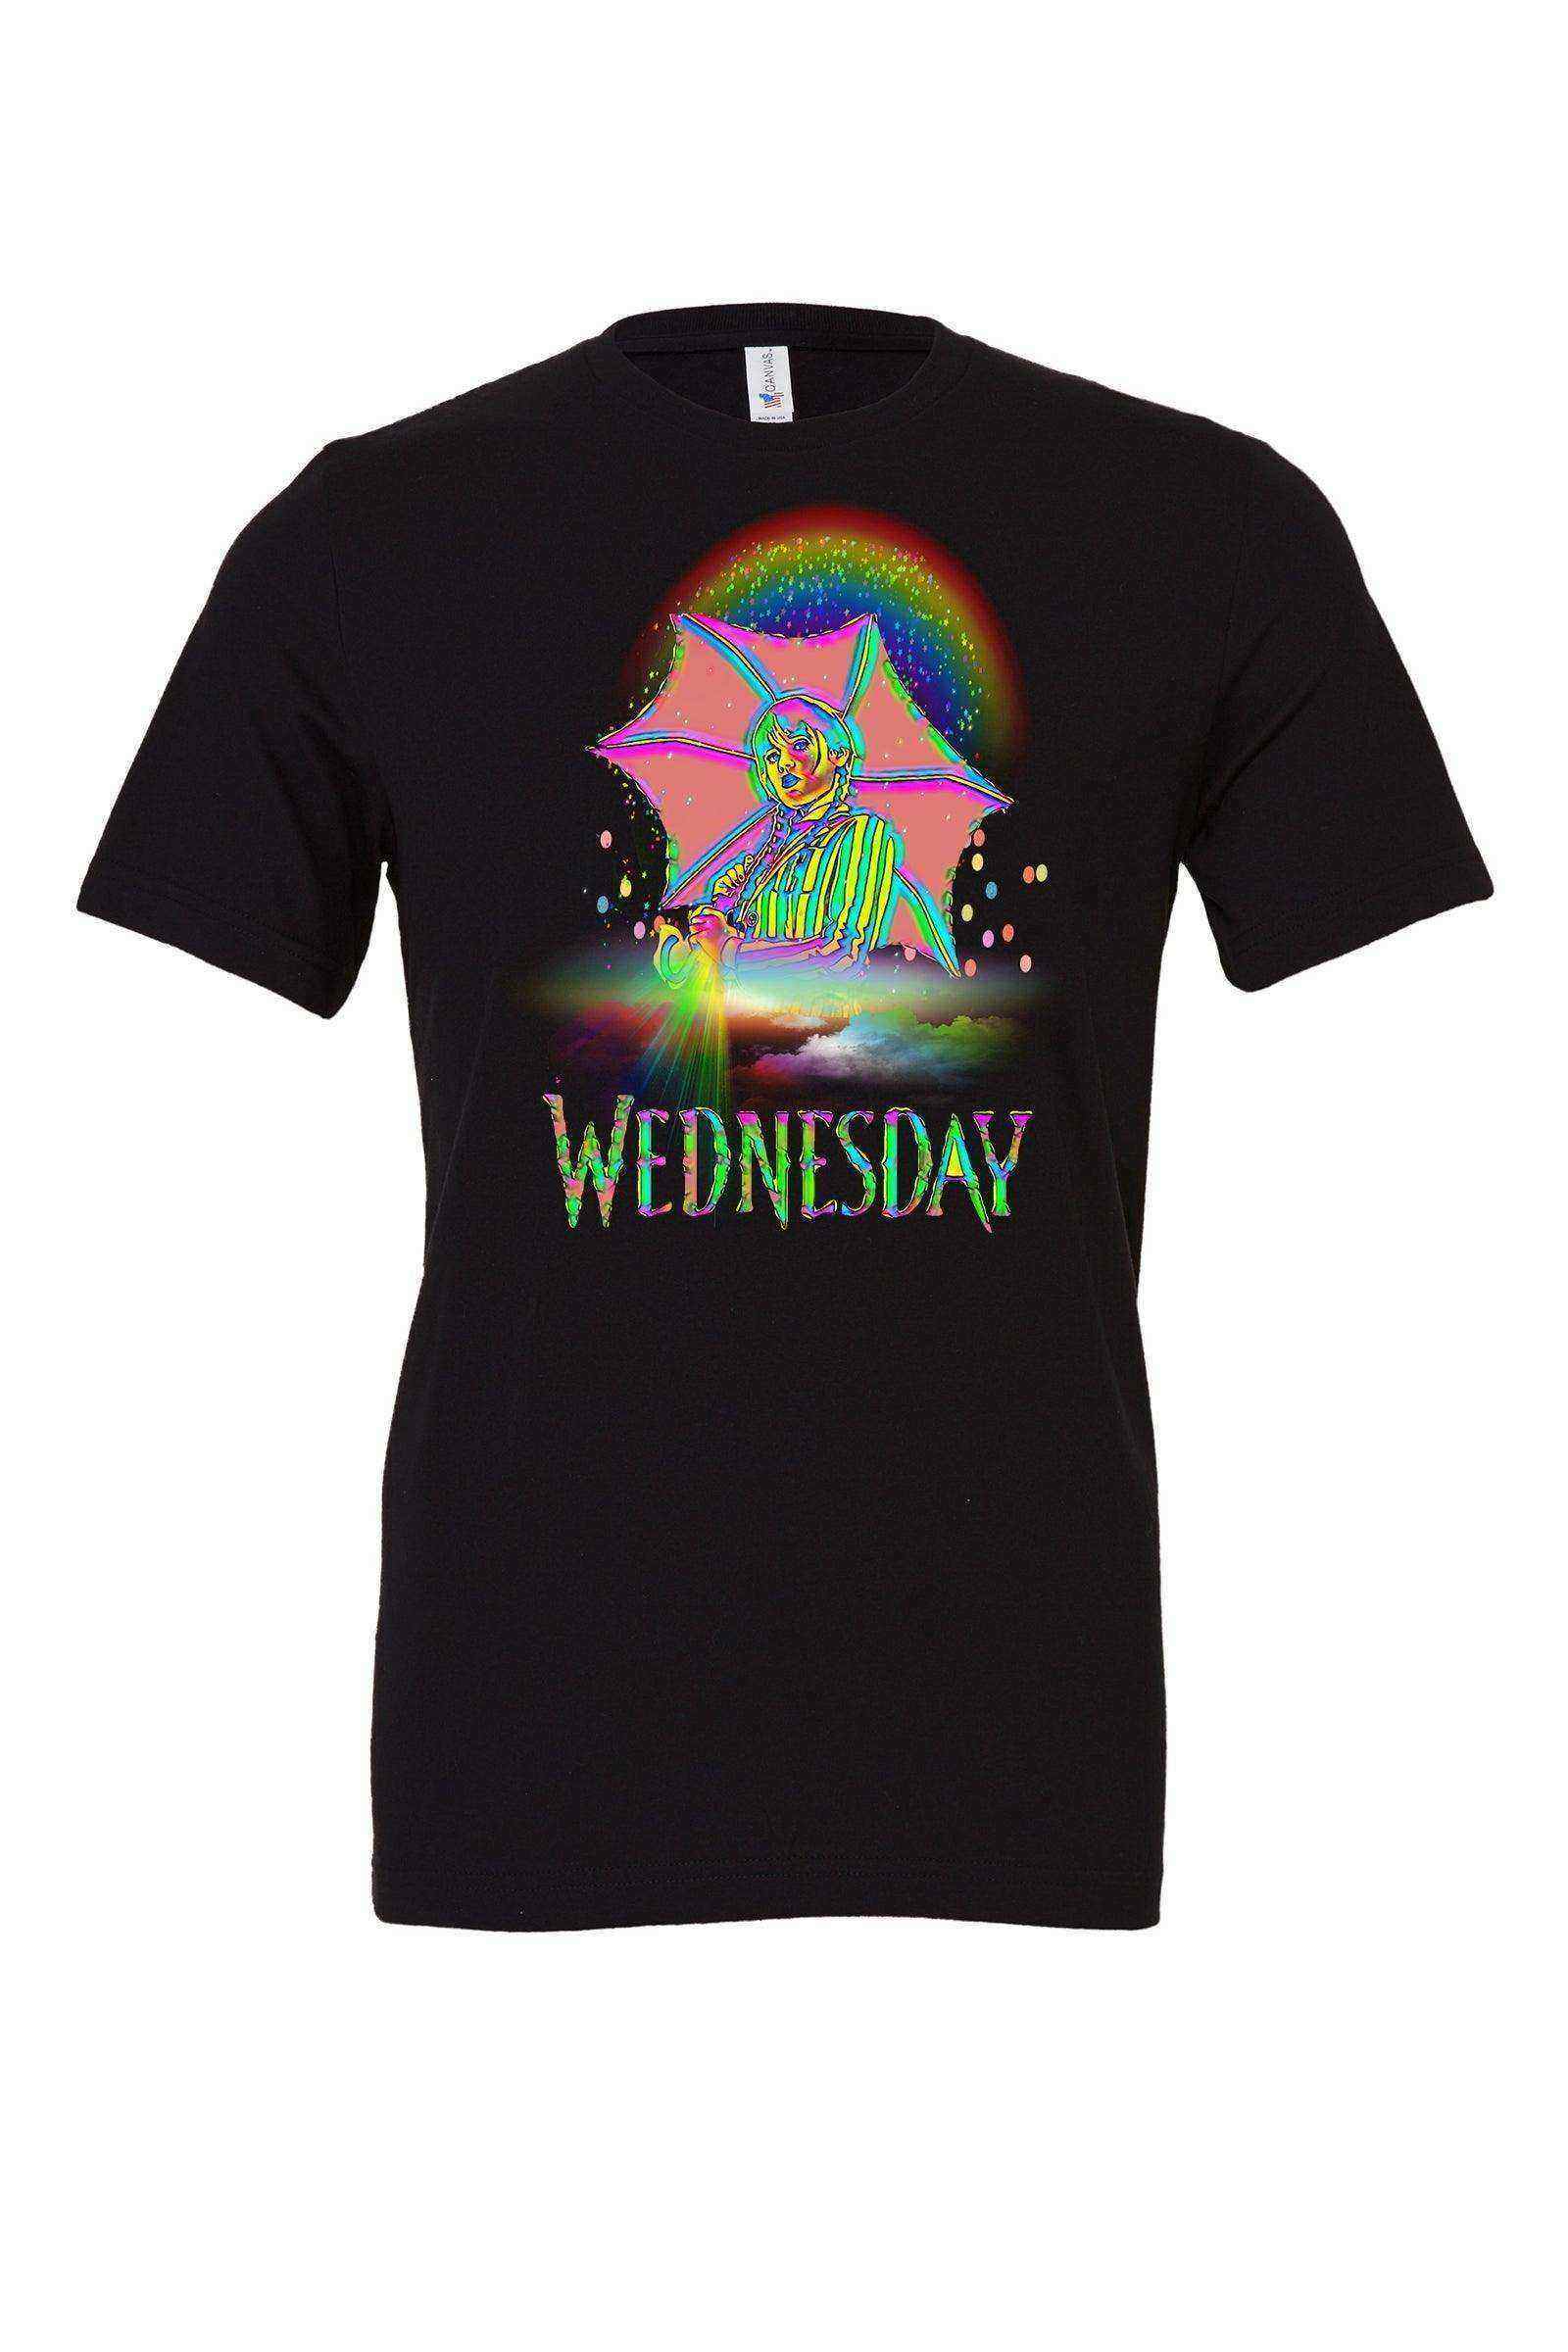 Youth | Bright Wednesday Shirt | Umbrella Girl Shirt | The Addams Shirt - Dylan's Tees